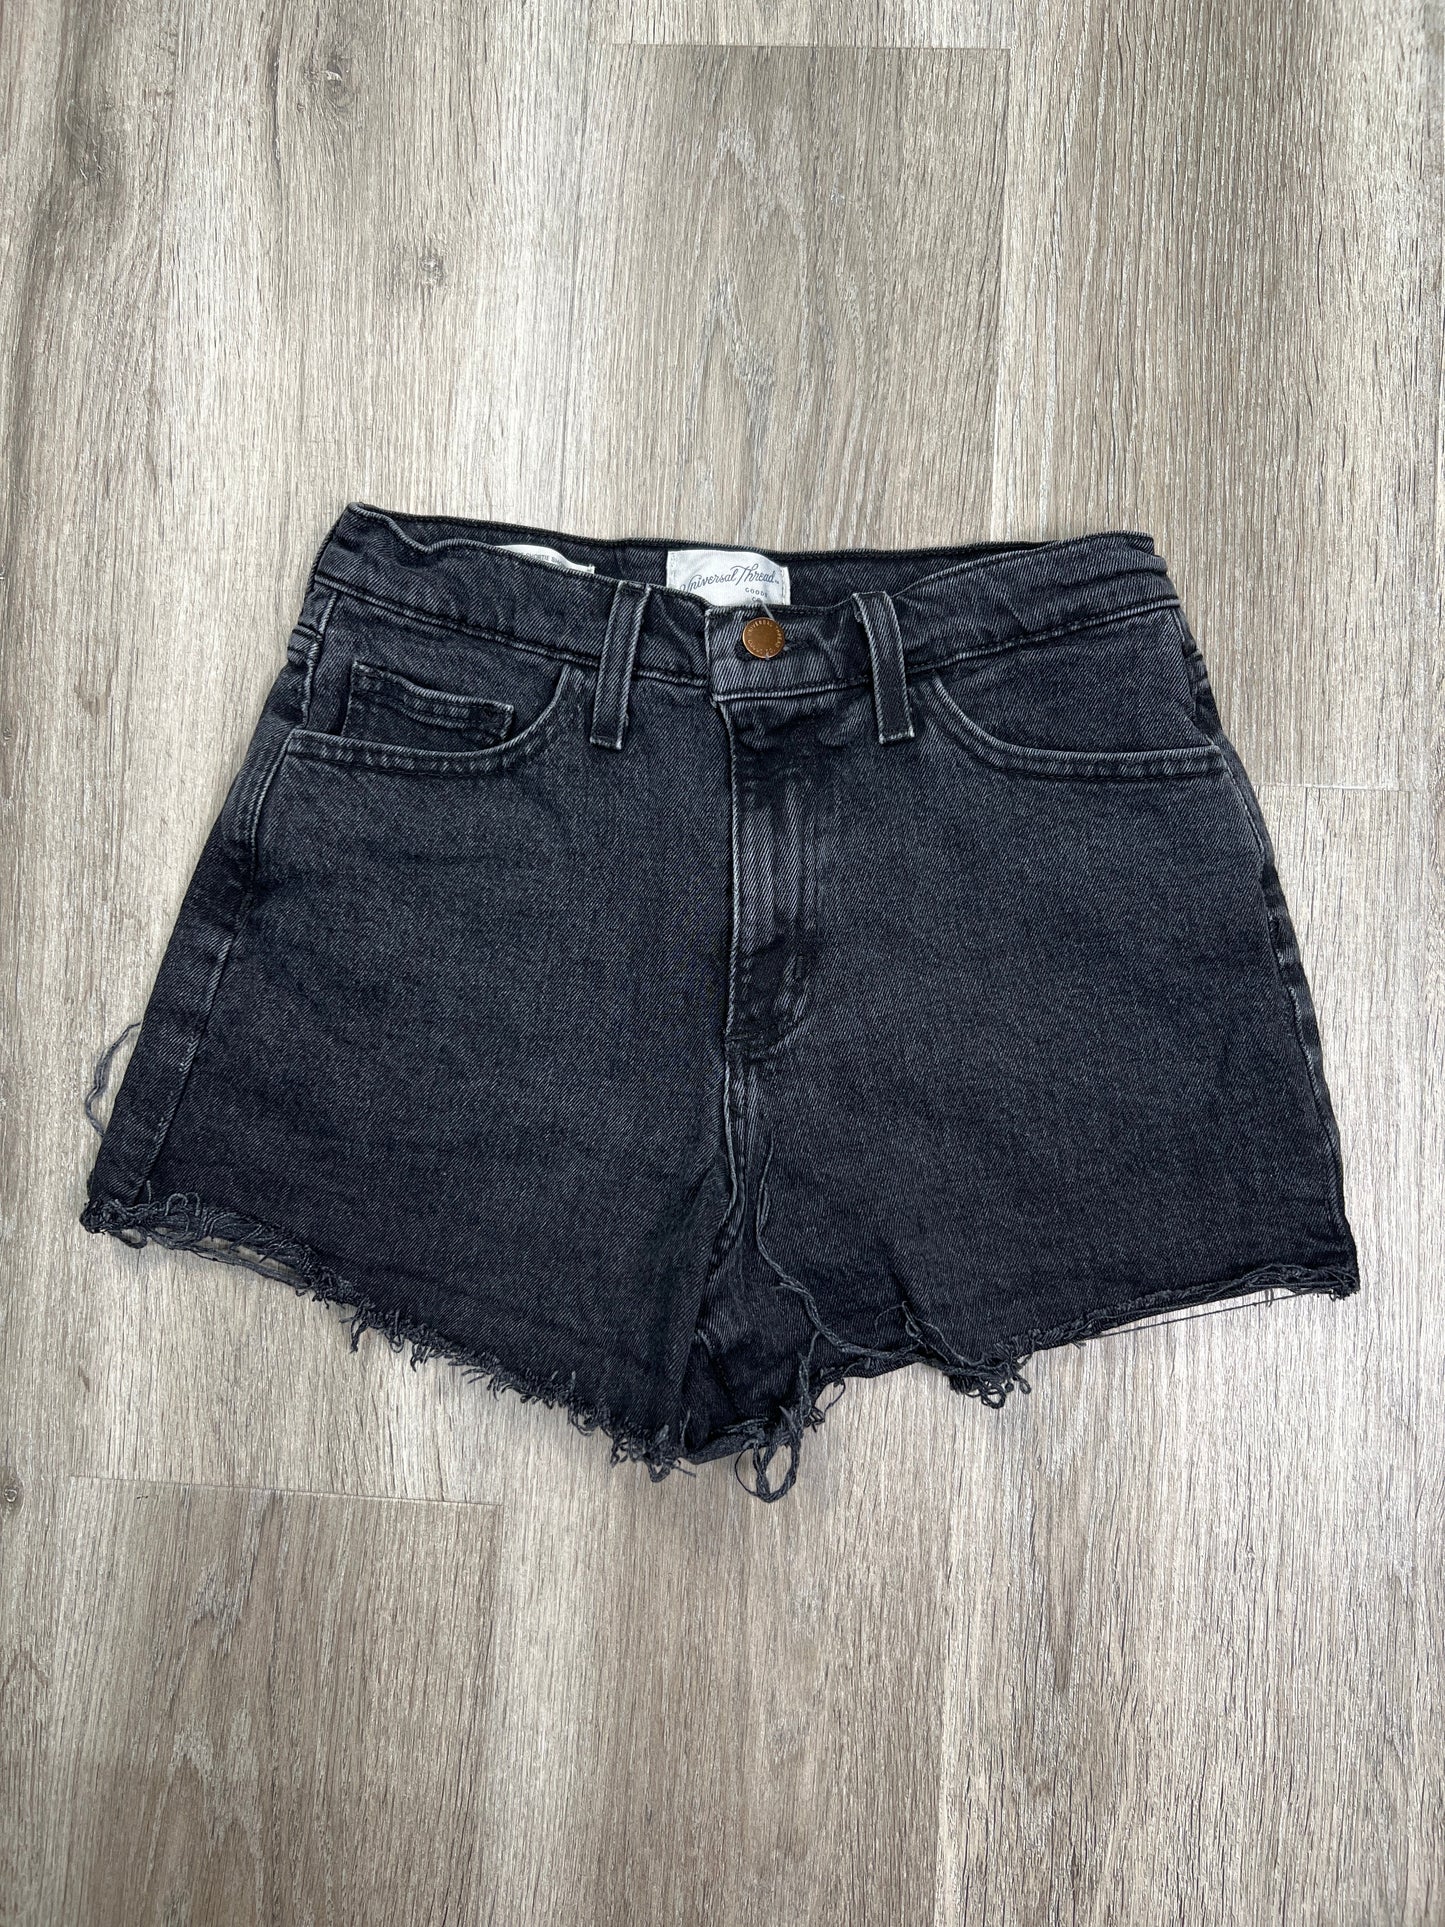 Black Denim Shorts Universal Thread, Size S